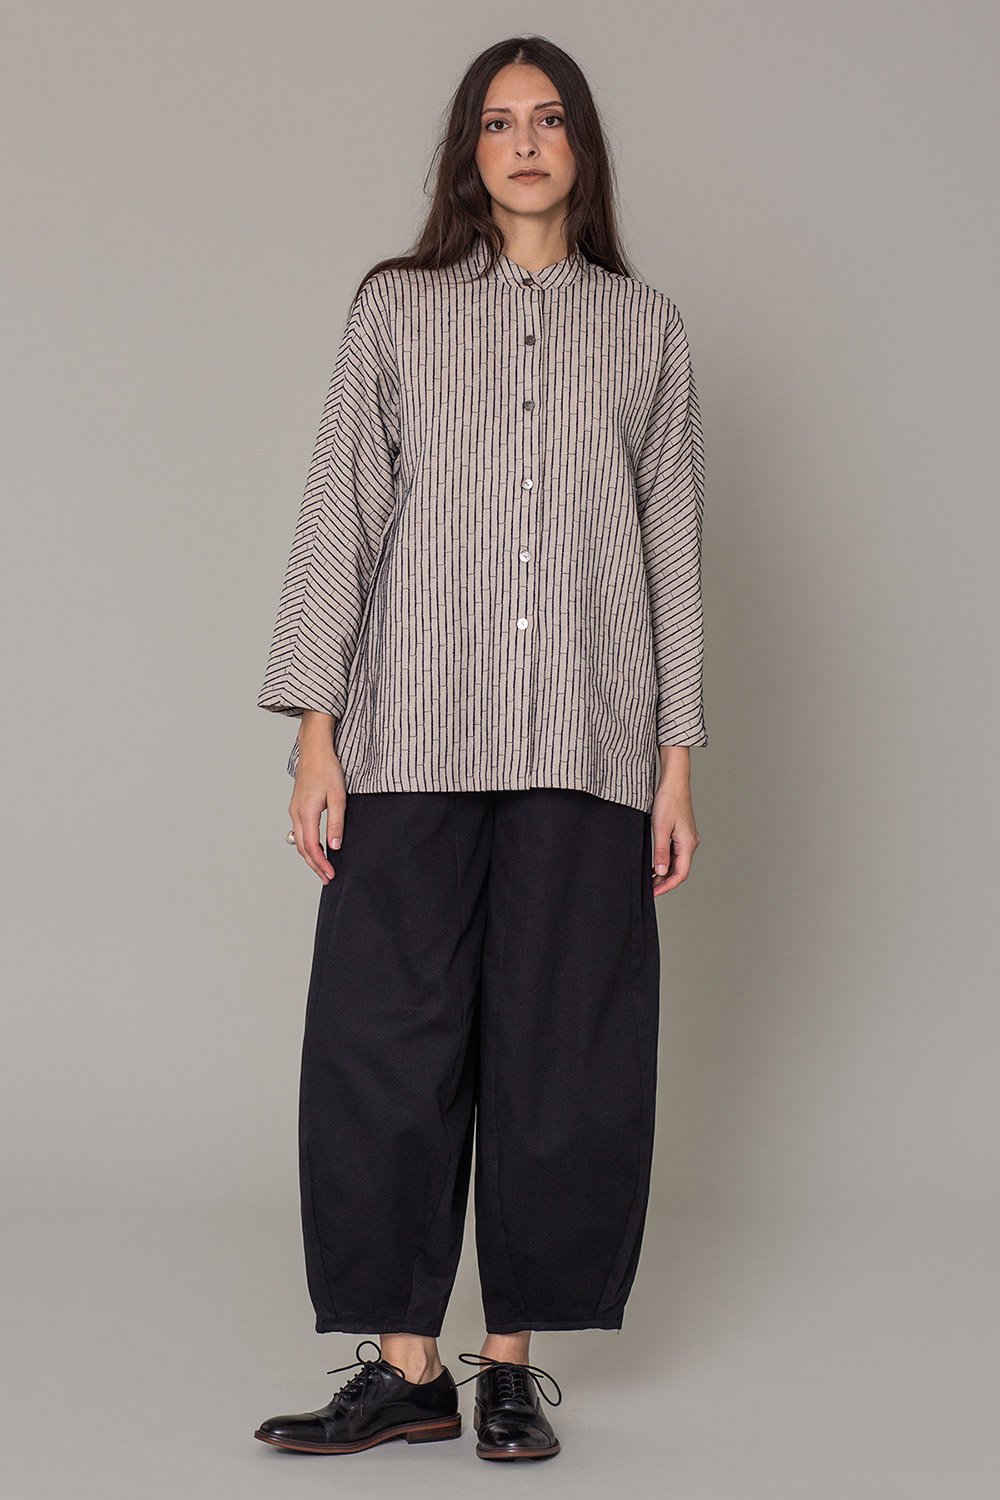 Japan Shirt in Contemporary Japanese Nuno Linen “Hariko” – Natural ...